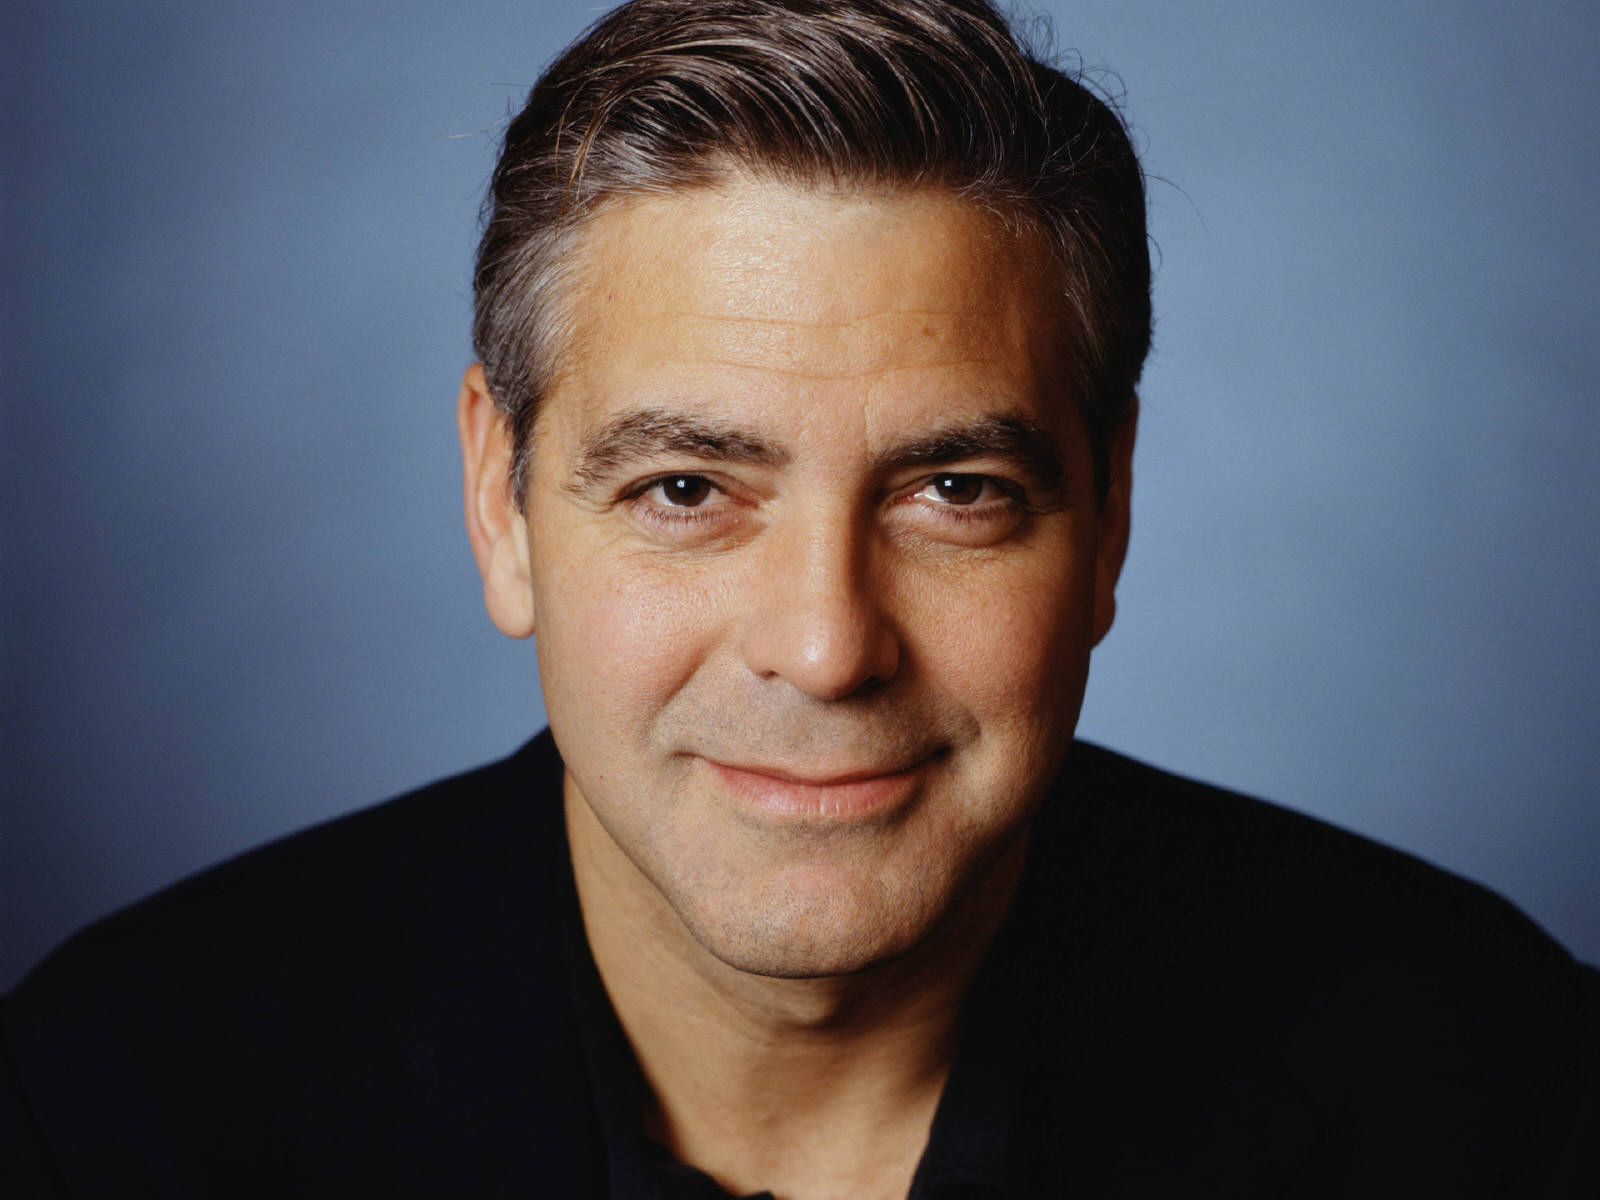 http://www.armradio.am/en/wp-content/uploads/2013/09/George-Clooney.jpg